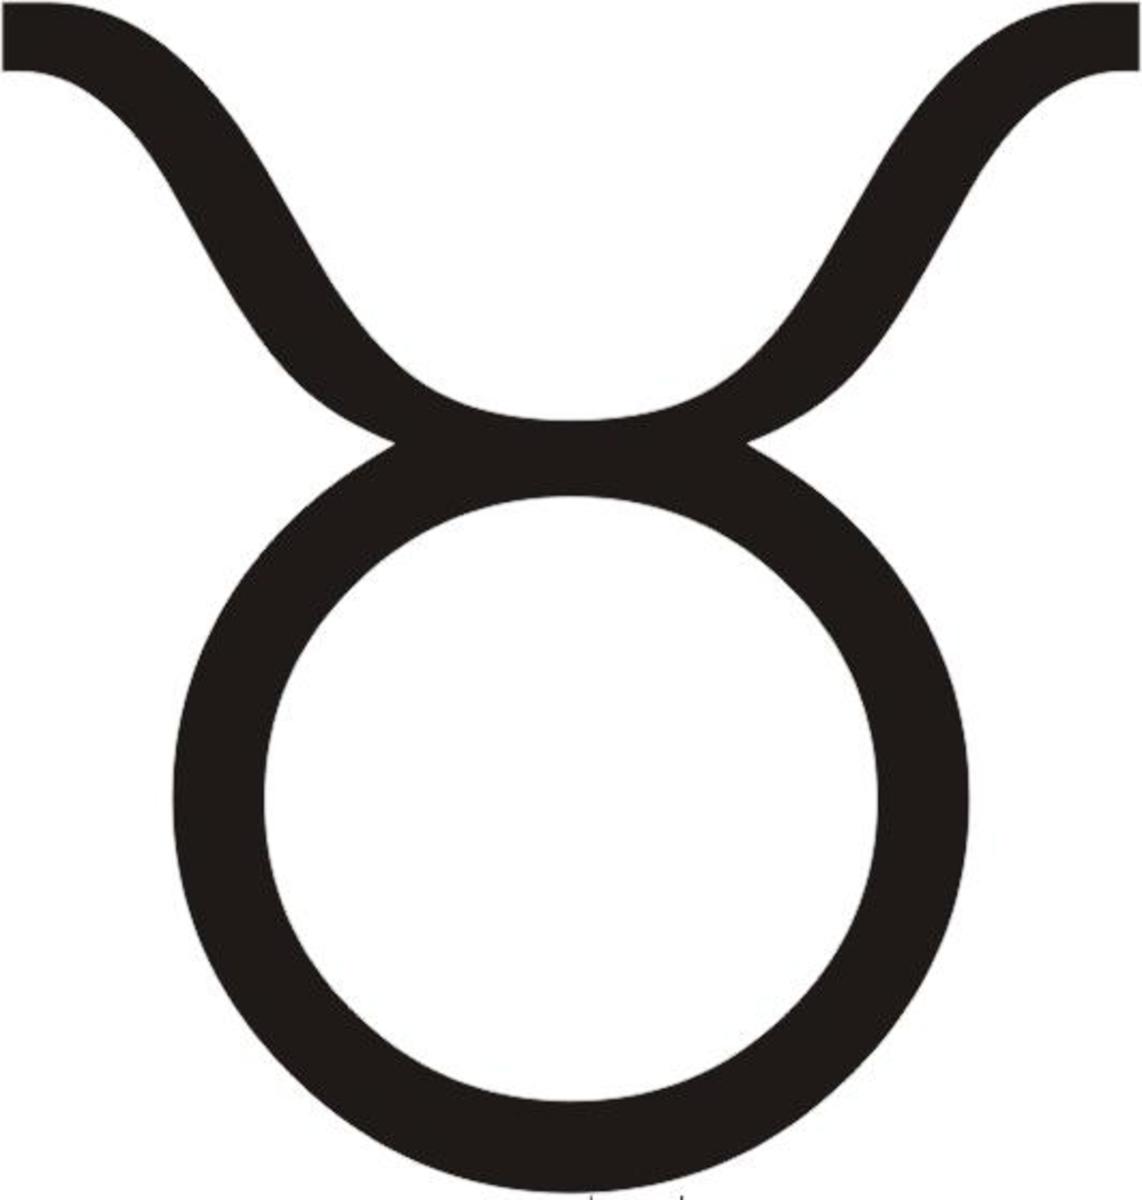 The Bull symbolizes the Zodiac sign Taurus.